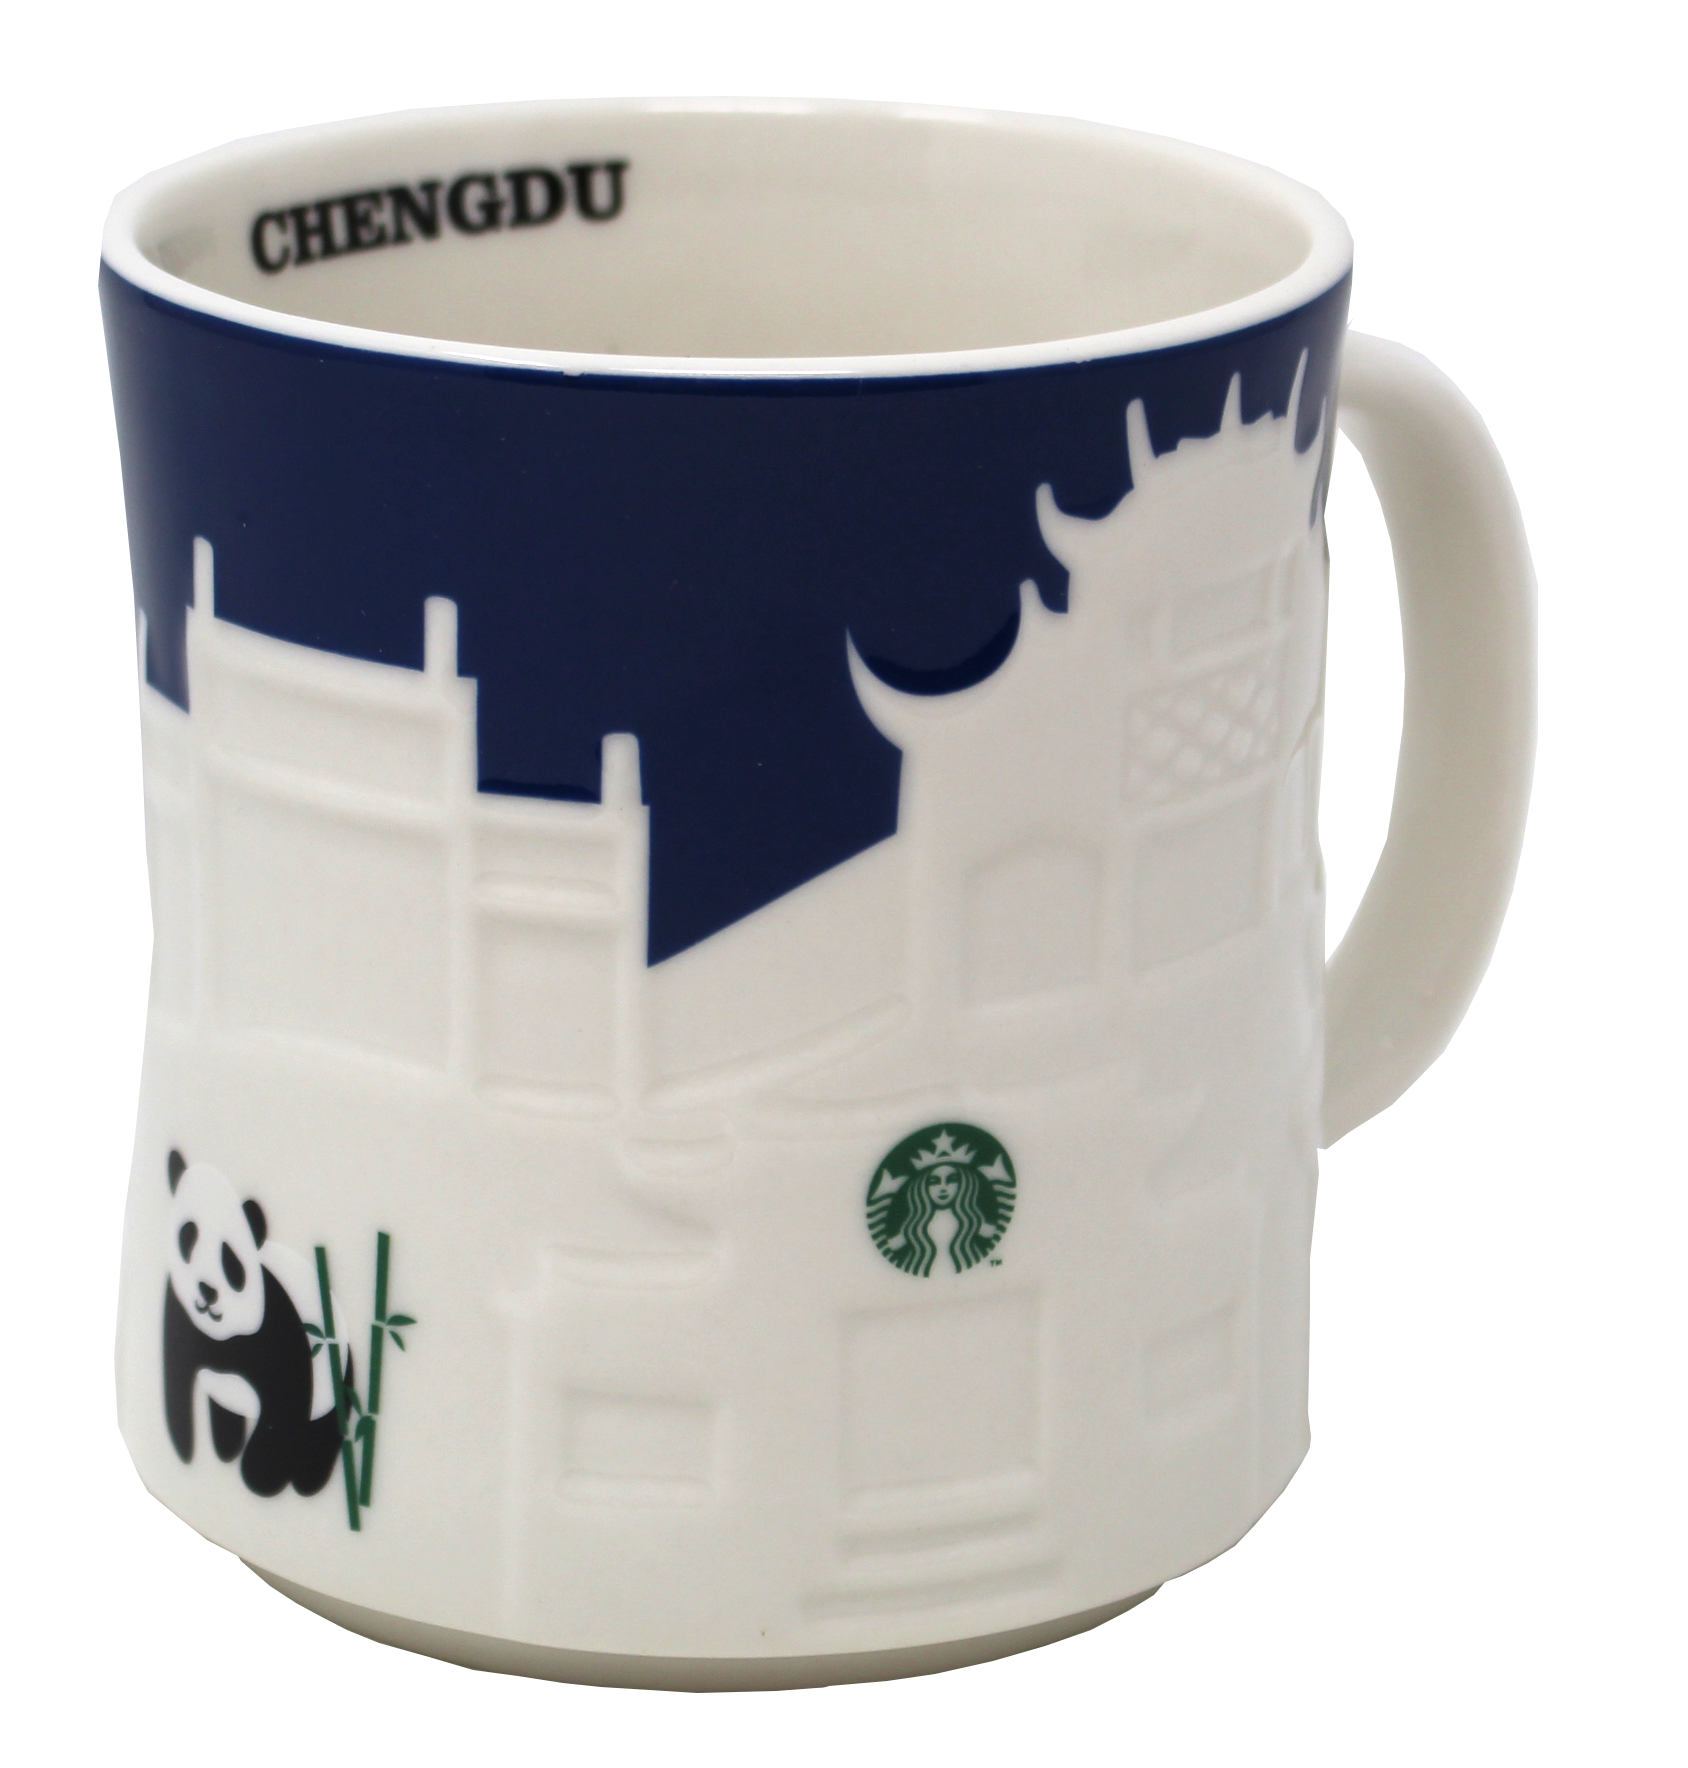 Starbucks Collector Relief Series Chengdu Ceramic Mug, 16 Oz